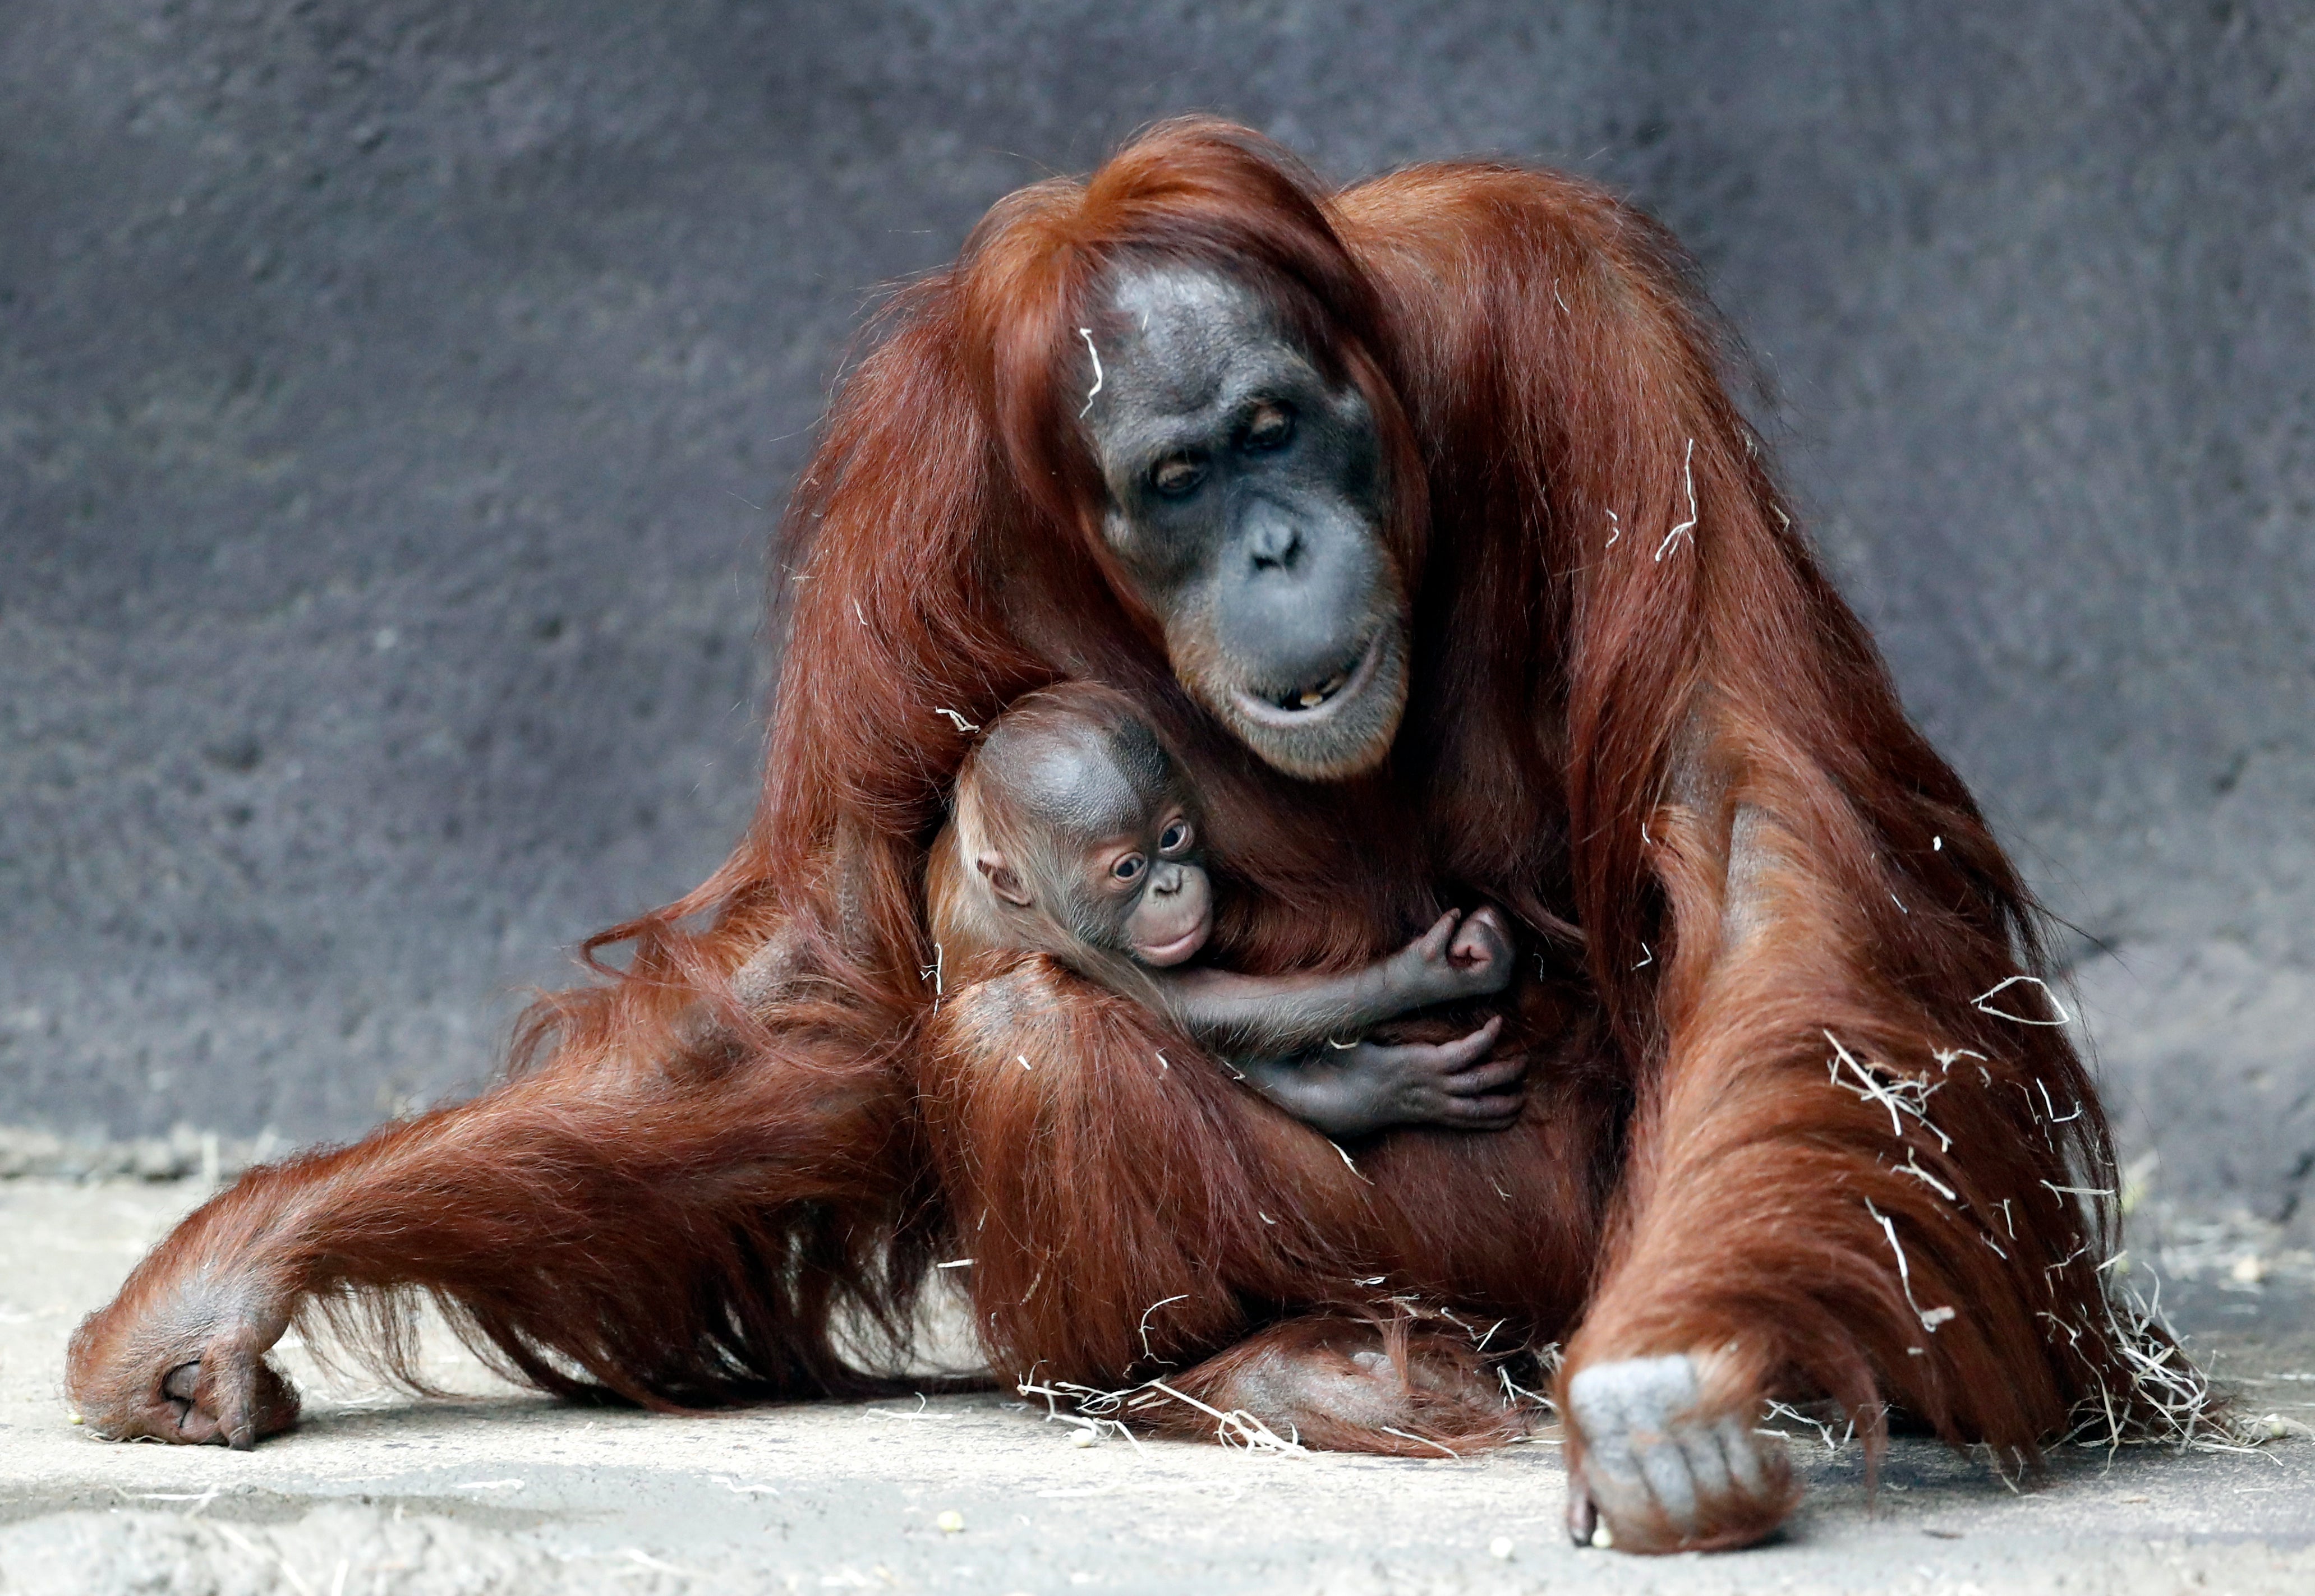 ‘Deforestation threatens the Sumatran orangutan with extinction’